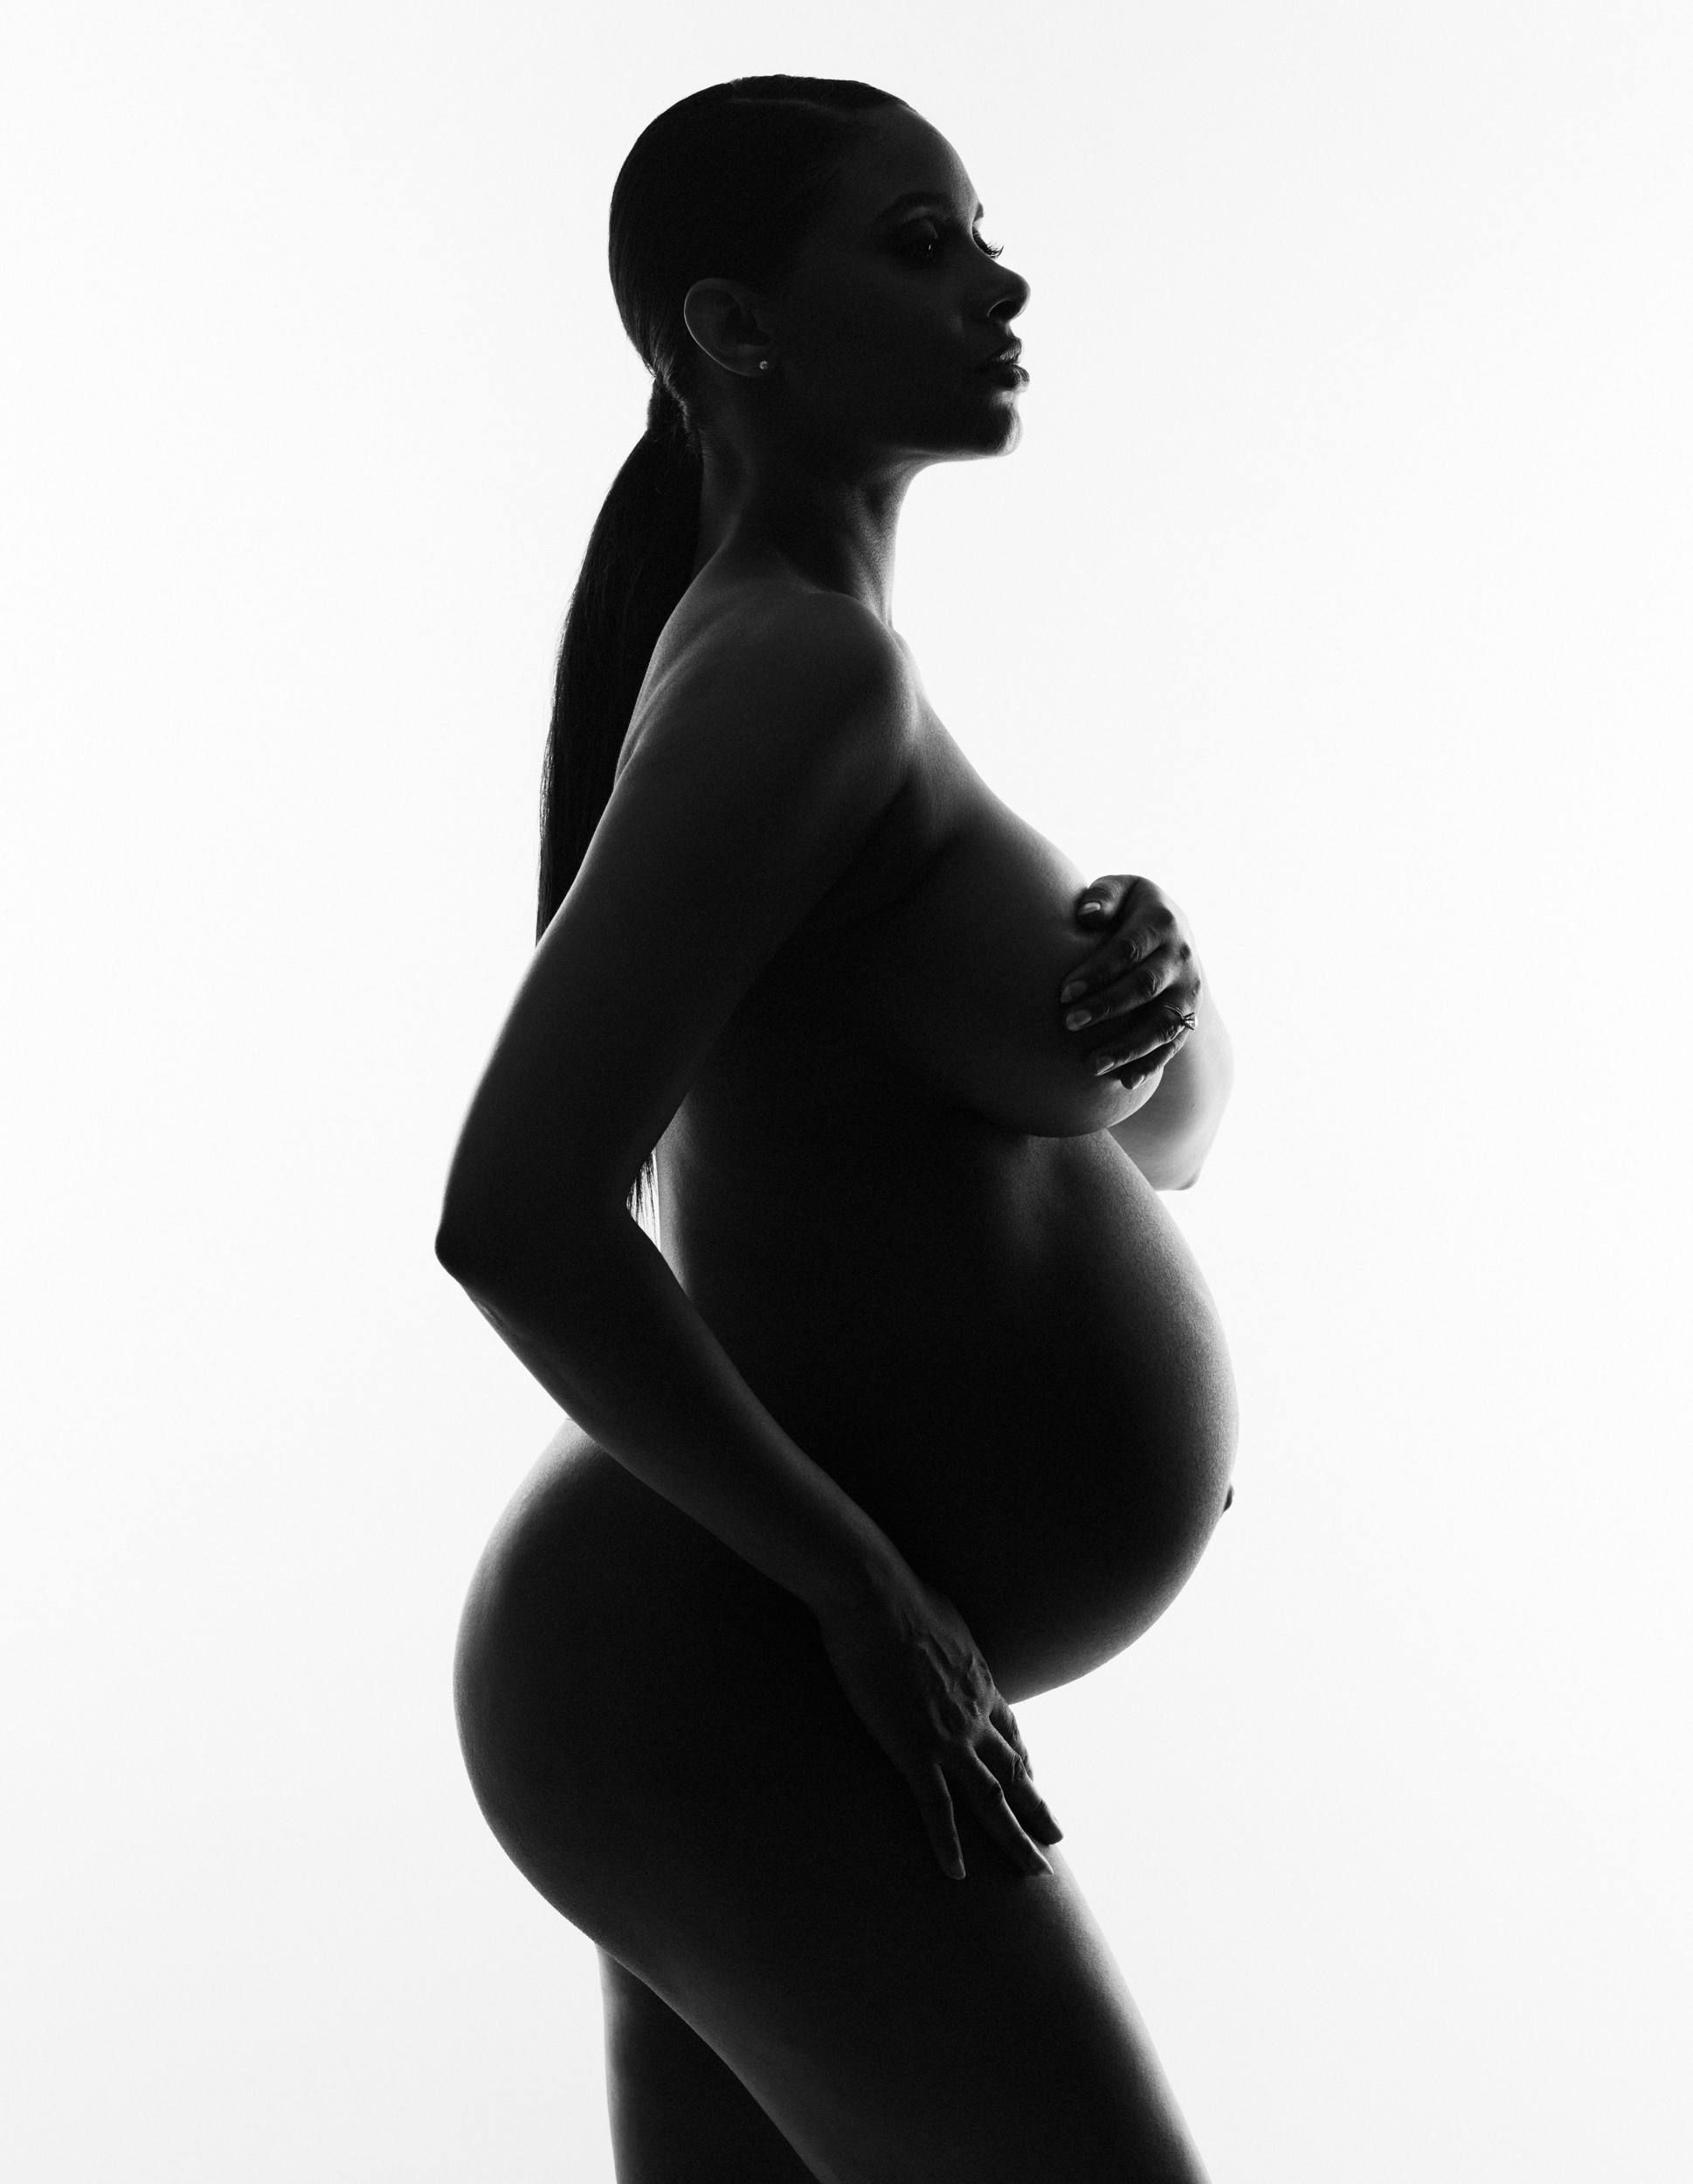 gorgeous b&amp;w pregnancy silhouette. Artistic NYC maternity photography by Lola Melani - esteemed celebrity pregnancy photographer&nbsp;